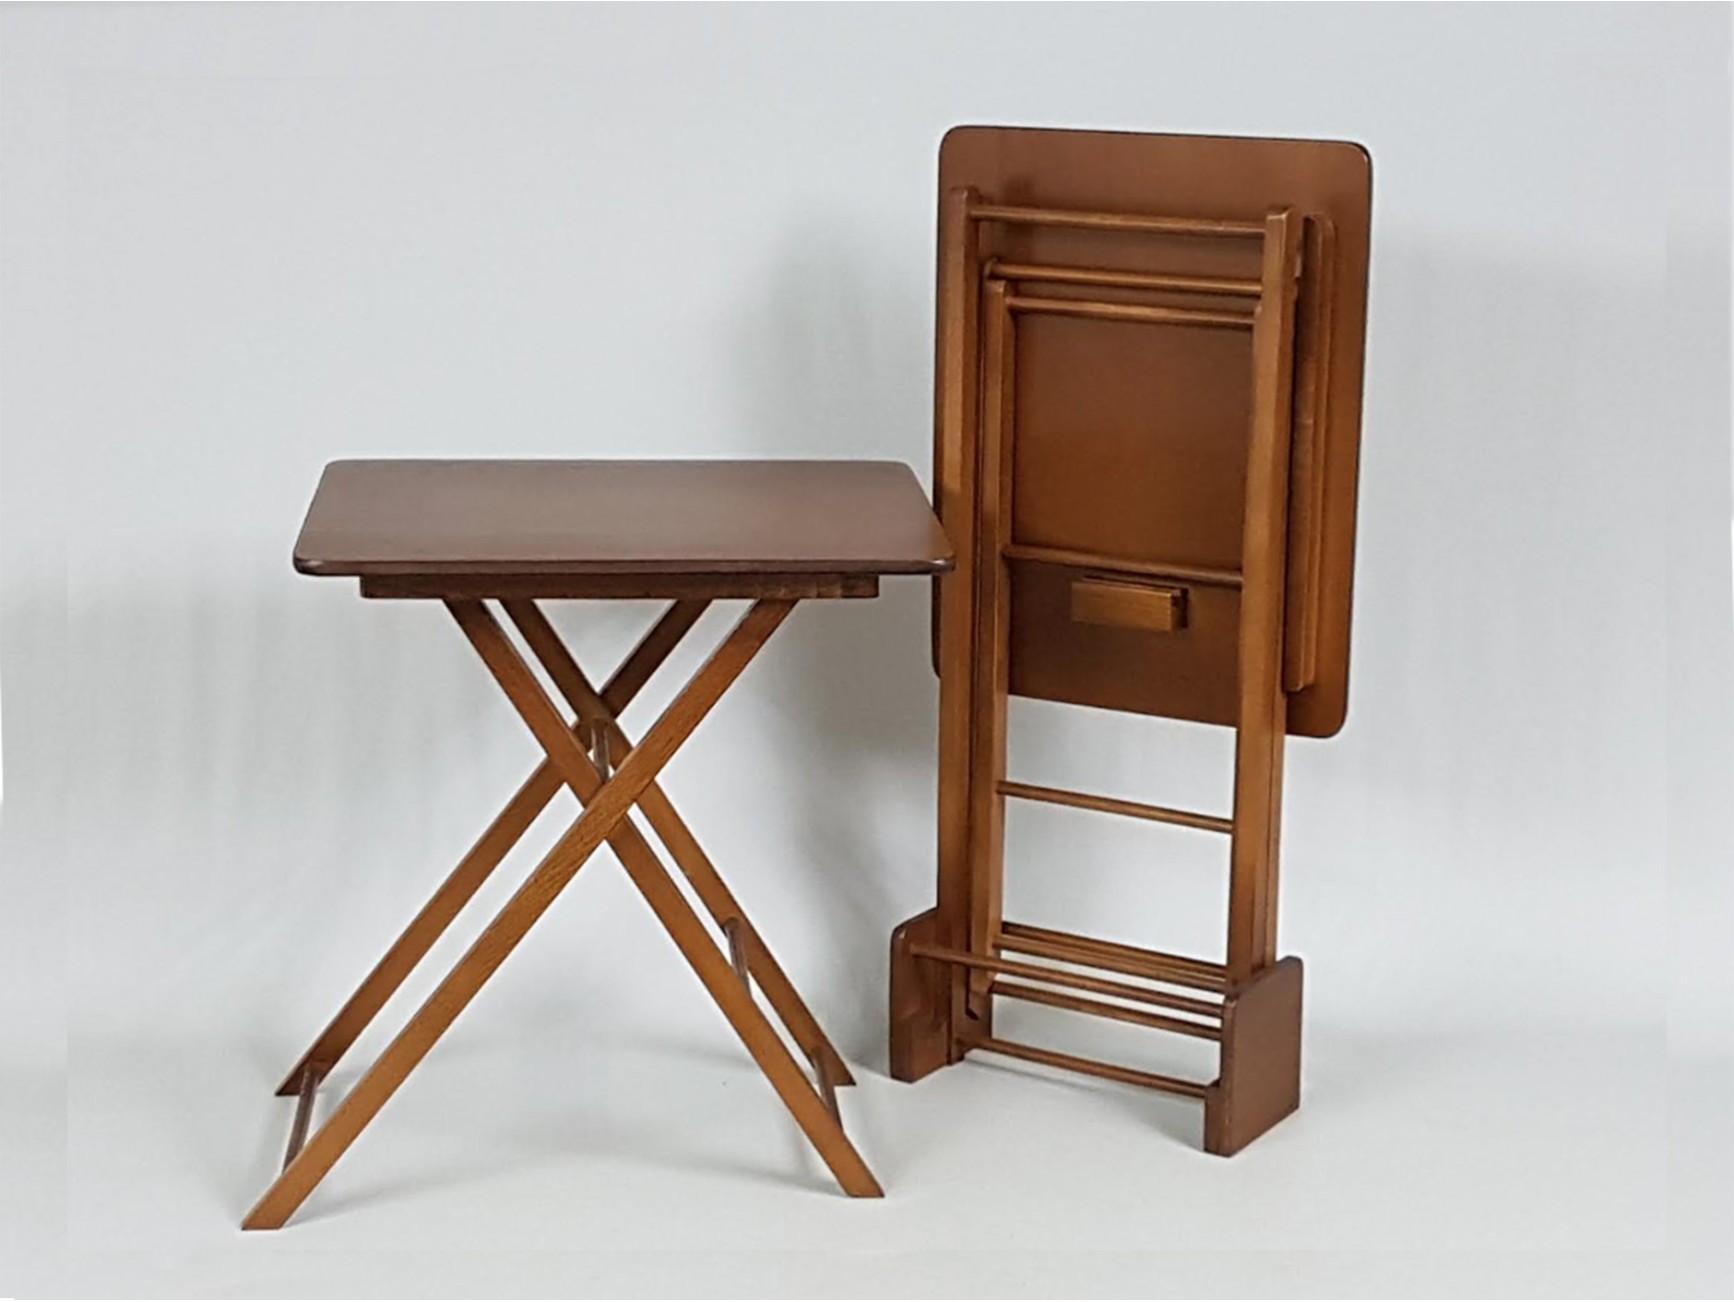 Gaston Cruzado - Mesa Plegable  Como hacer mesa plegable, Mesa plegable, Mesa  plegable madera